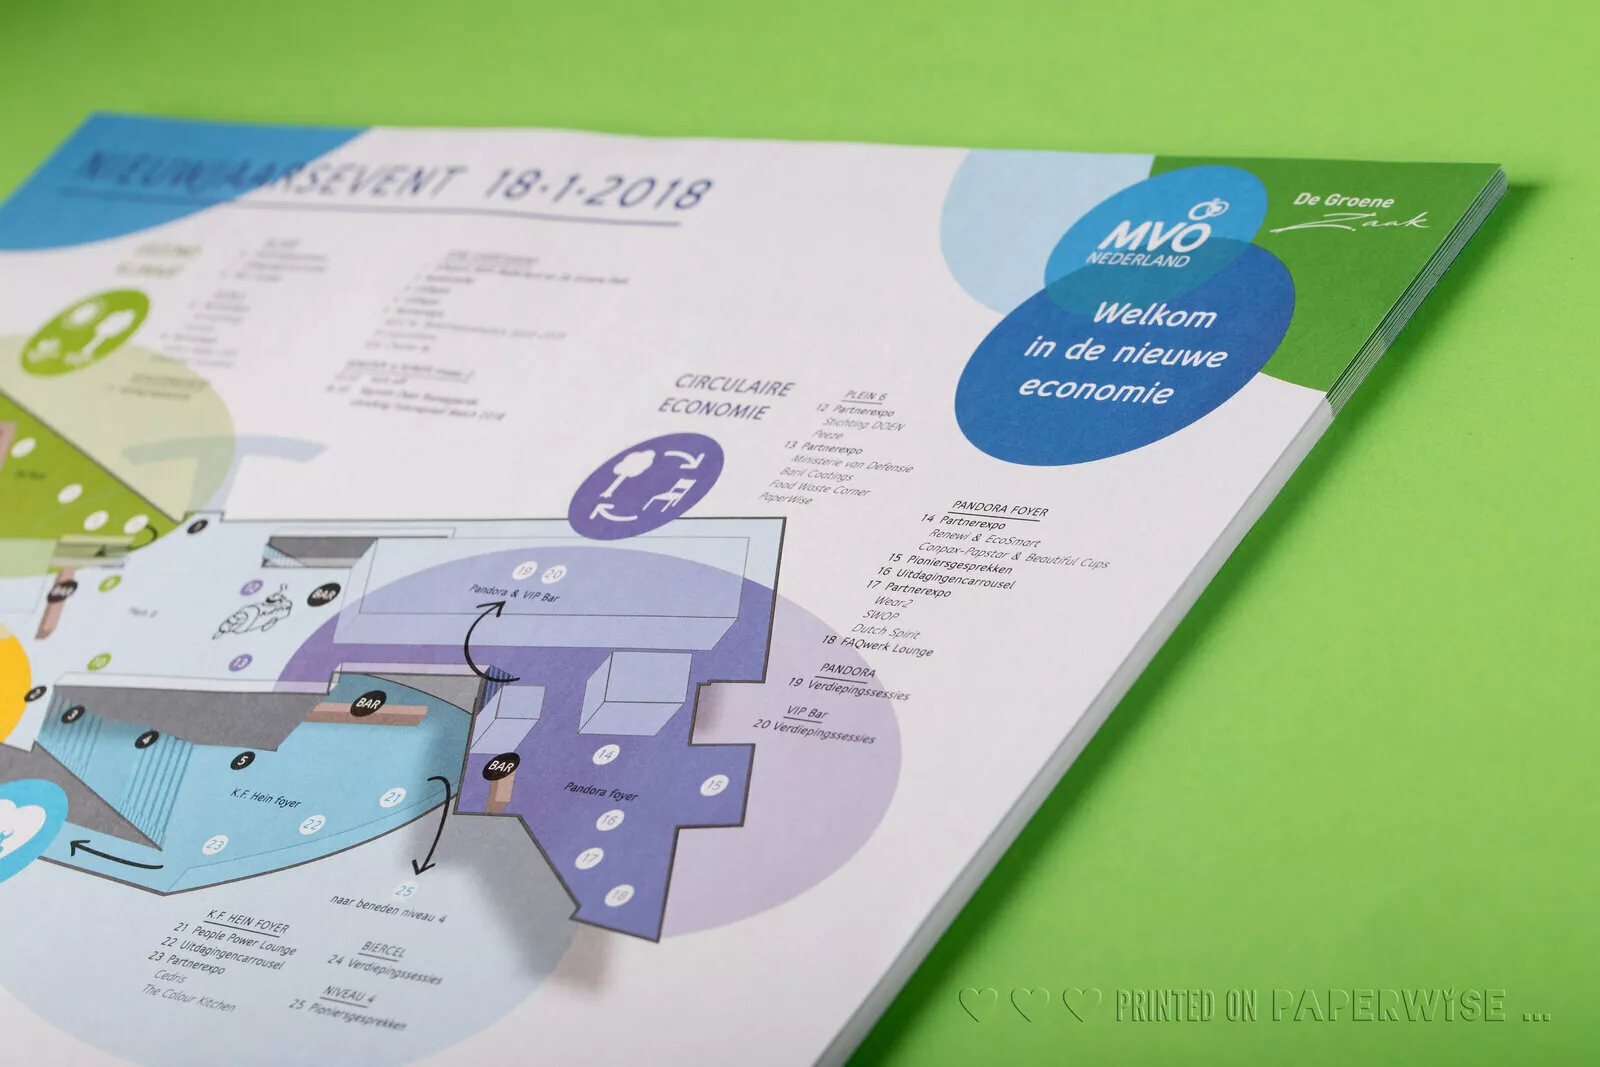 PaperWise eco friendly paper board agriwaste printing promo map floorplan CSR